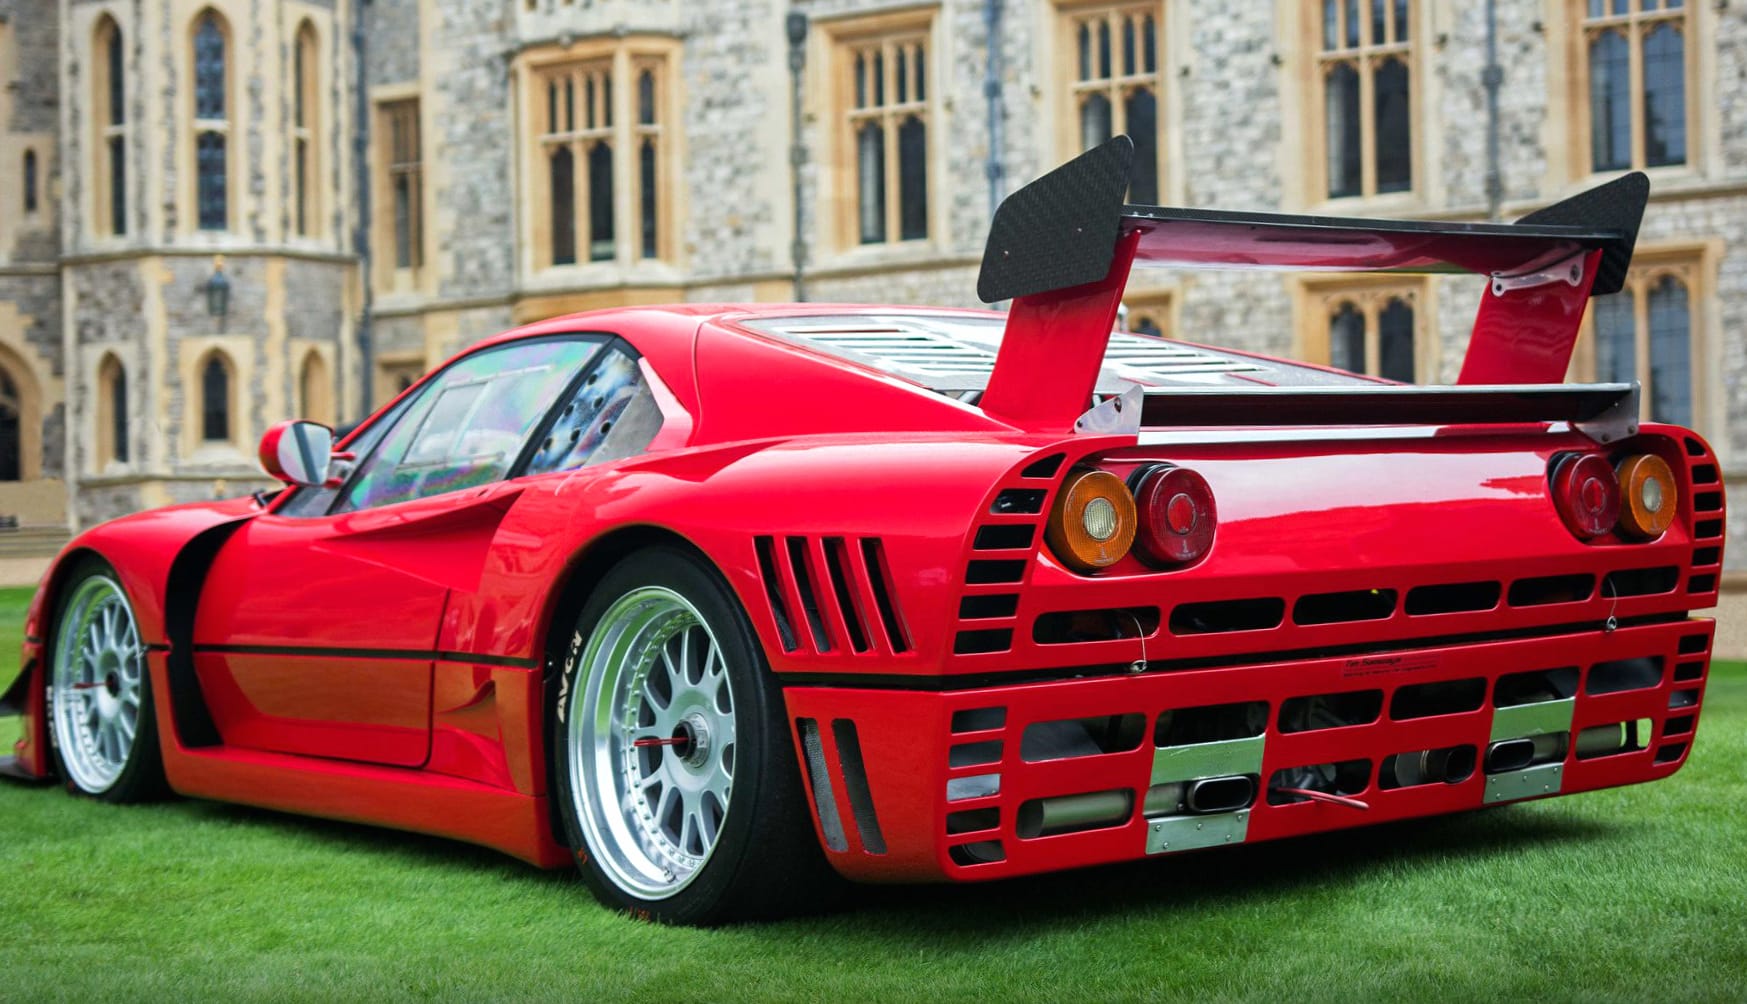 Ferrari GTO Evoluzione at 640 x 960 iPhone 4 size wallpapers HD quality